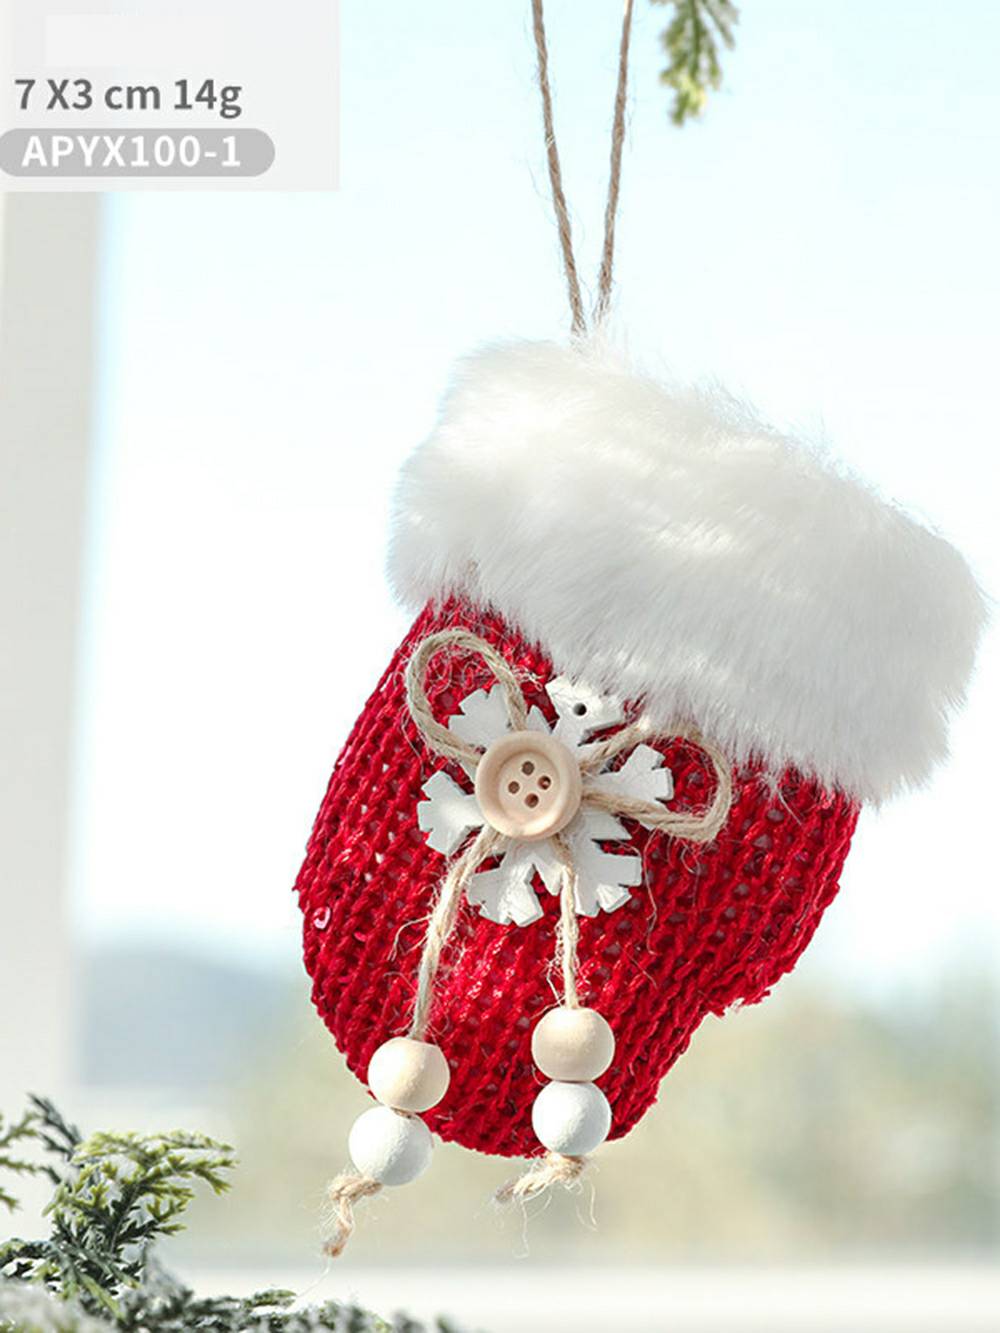 Christmas Stocking and Plush Glove Decoration Ornament Set